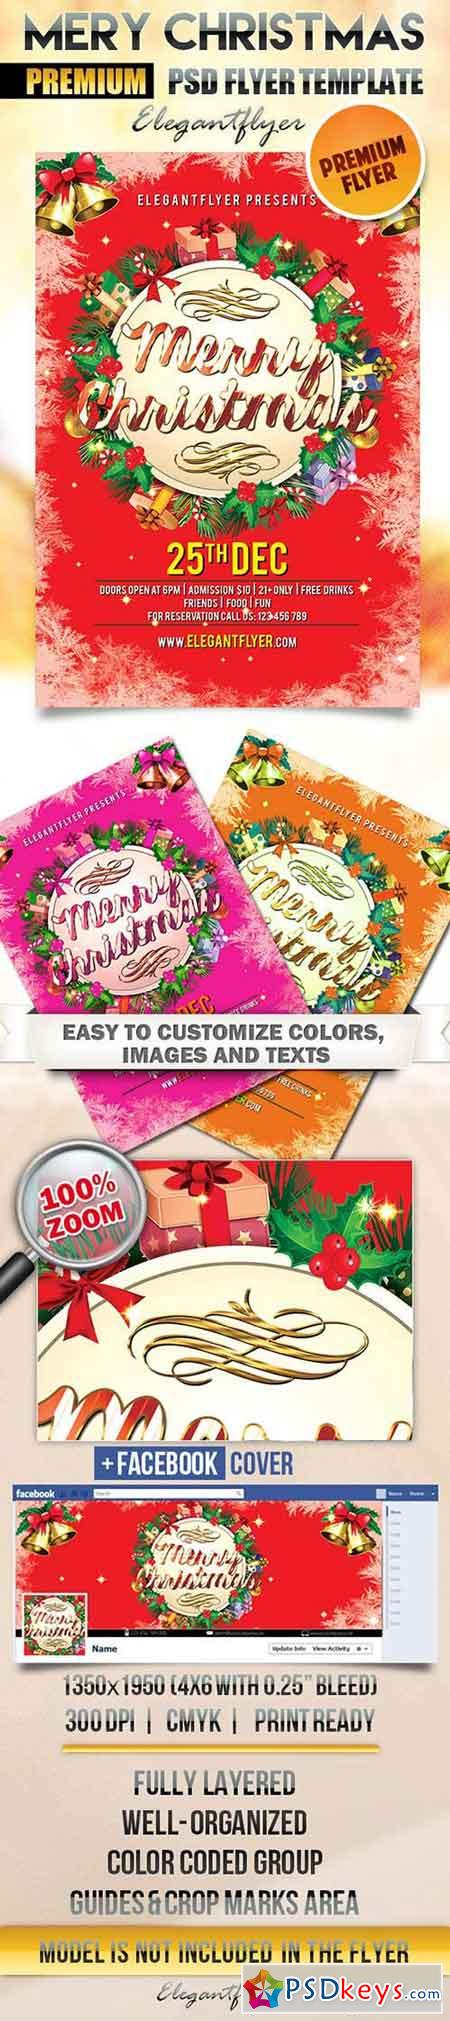 Merry Christmas Flyer PSD Template + Facebook Cover